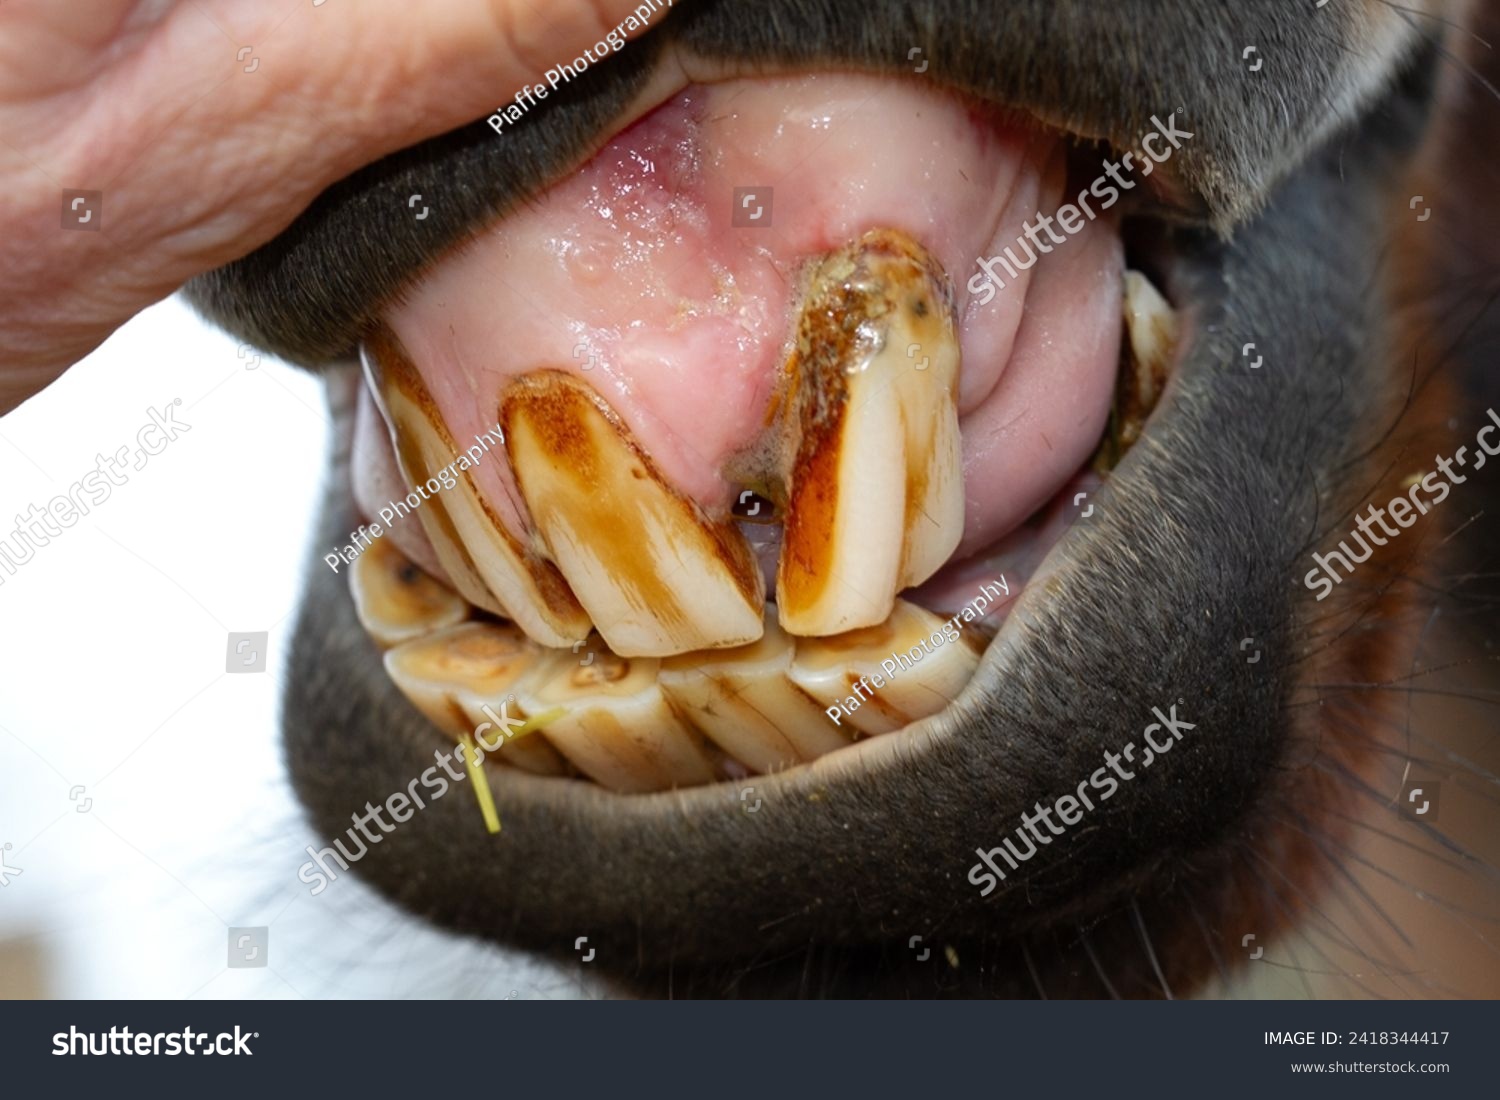 Horses teeth. Horse dental disease EOTRH. Rotting teeth. Swollen, inflamed gums. Equine teeth. Inside horses mouth. Equestrian  #2418344417